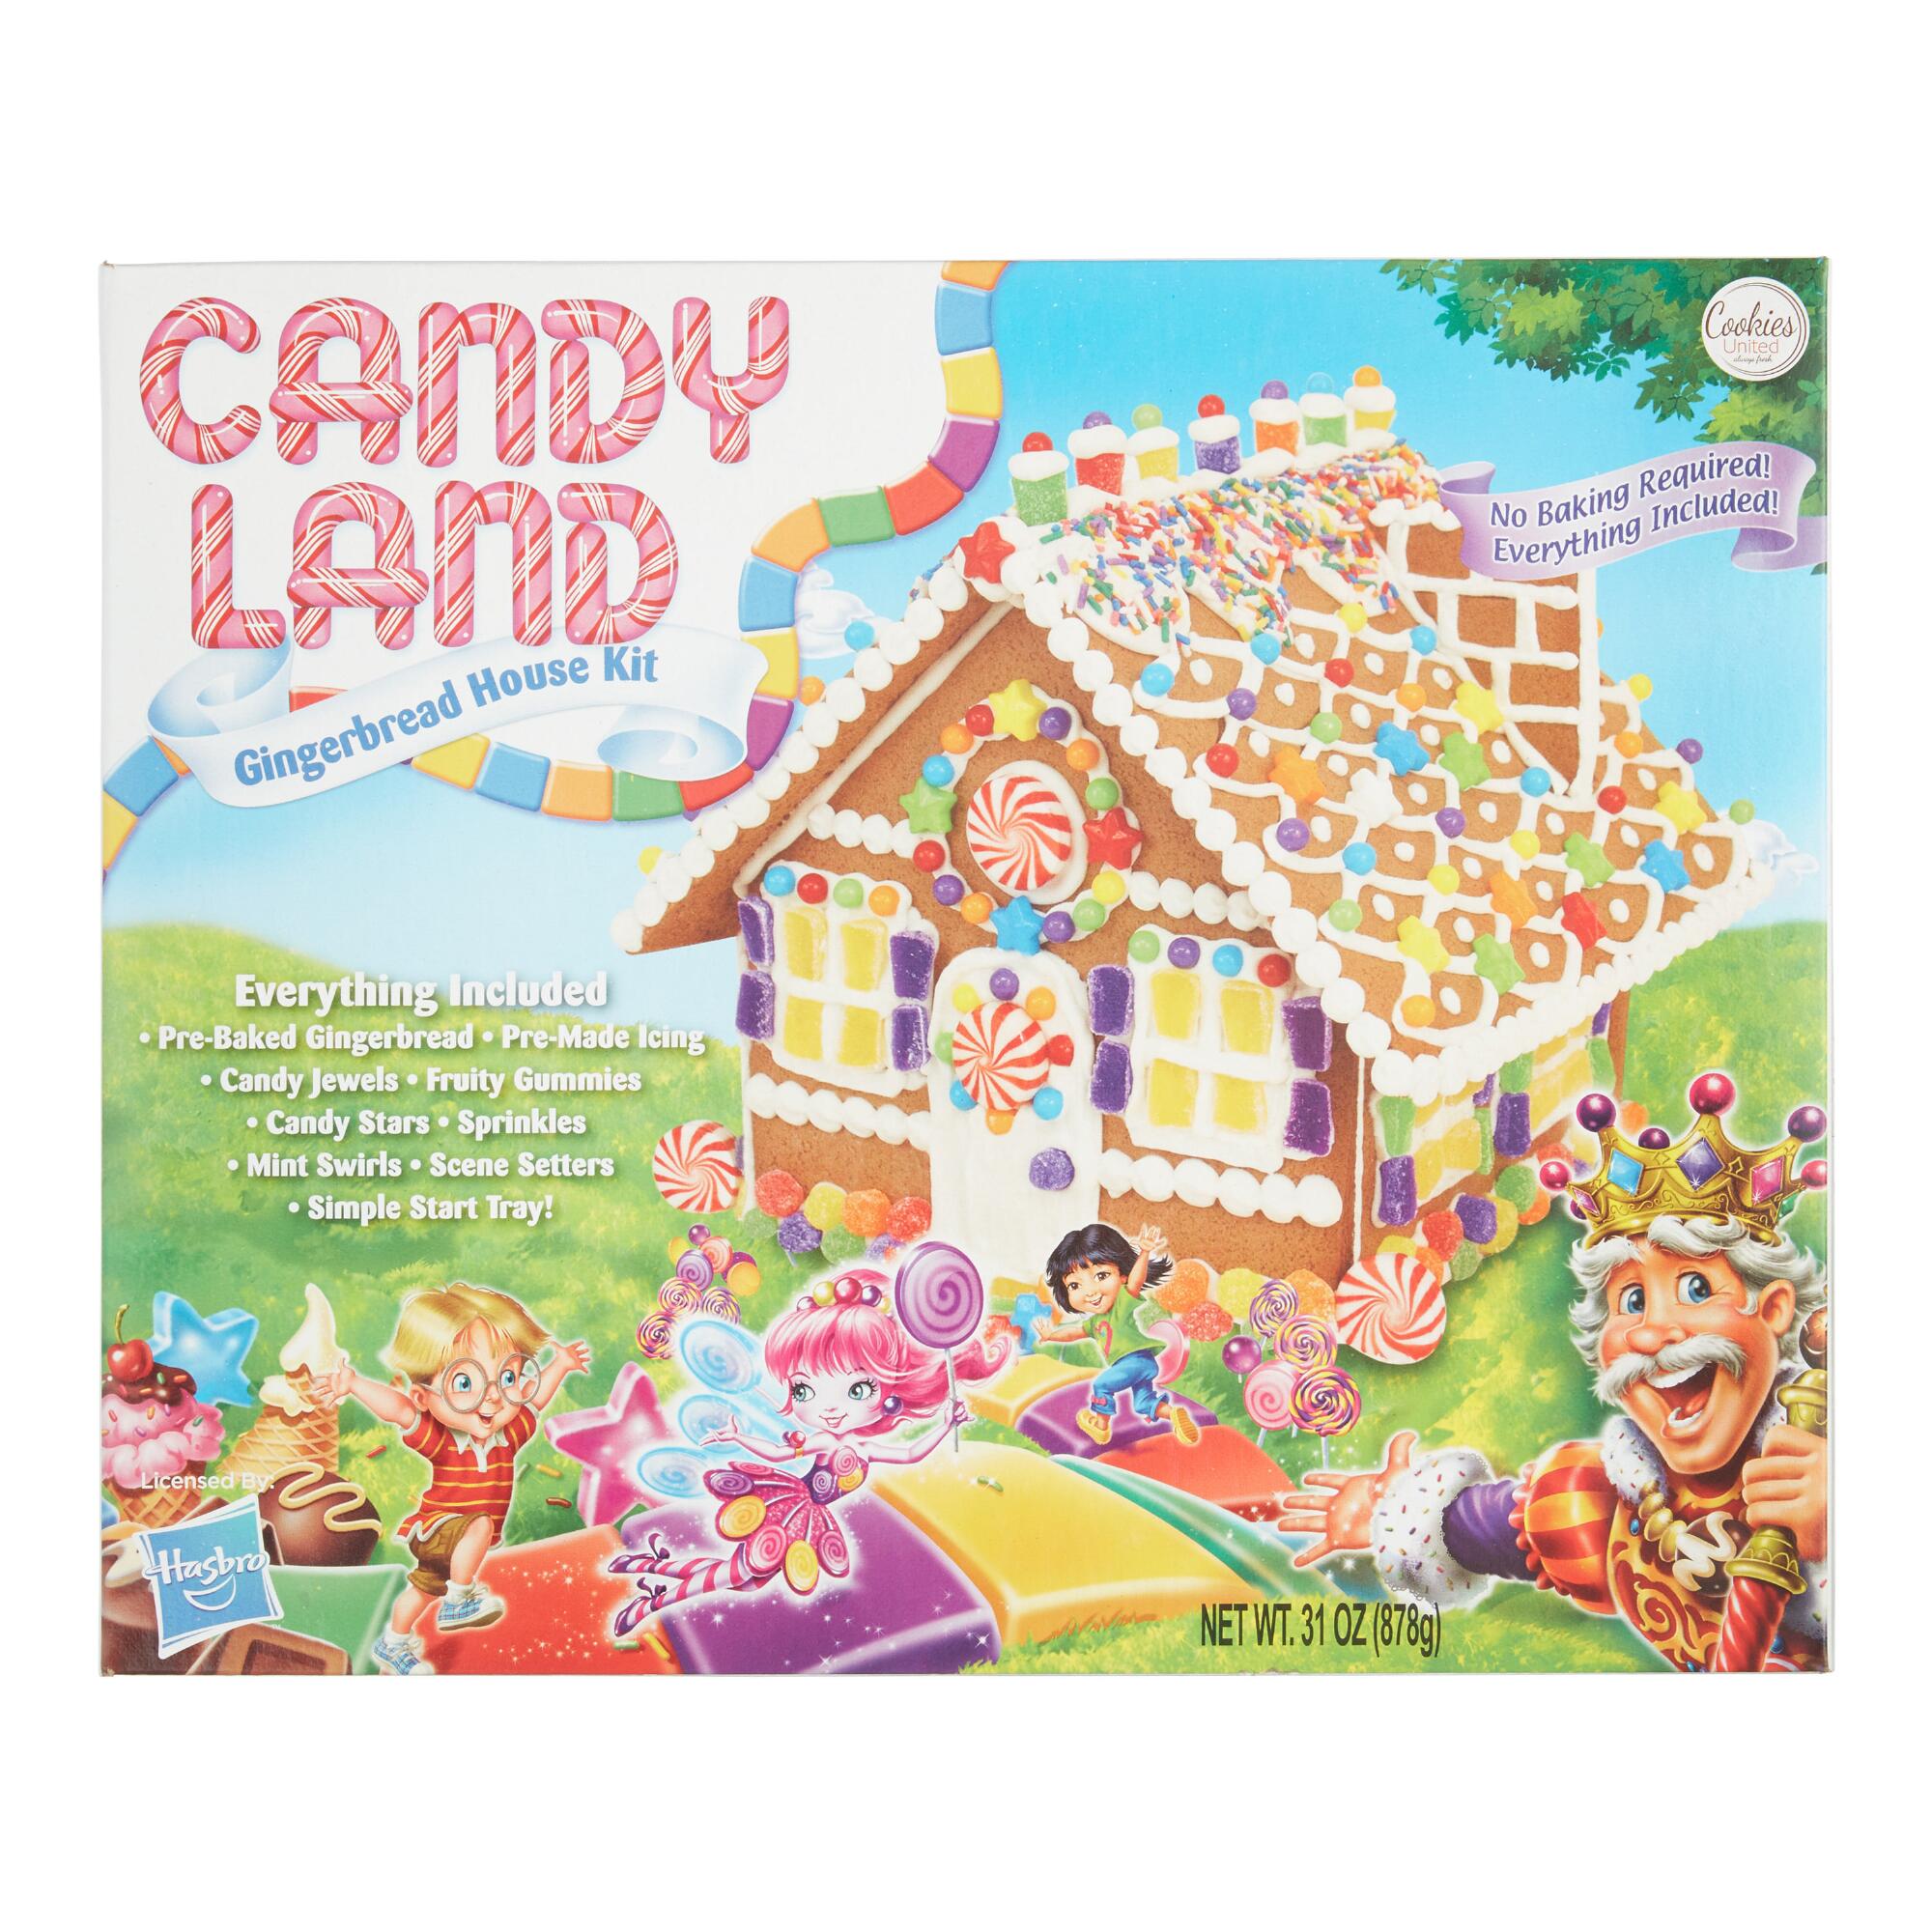 Candyland Gingerbread House Kit by World Market